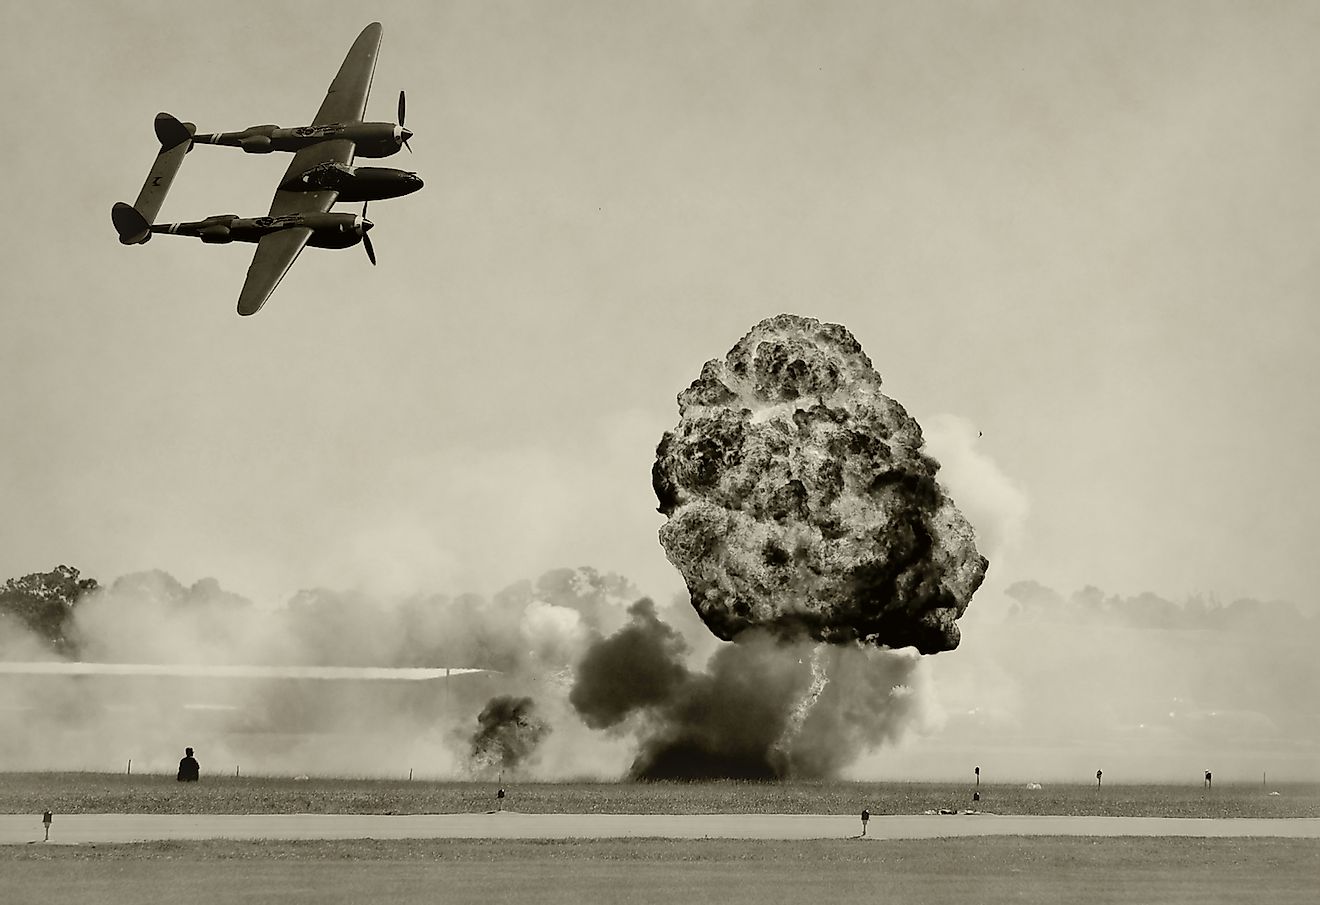 World War II era battle and bombing. Image credit: Ivan Cholakov/Shutterstock.com